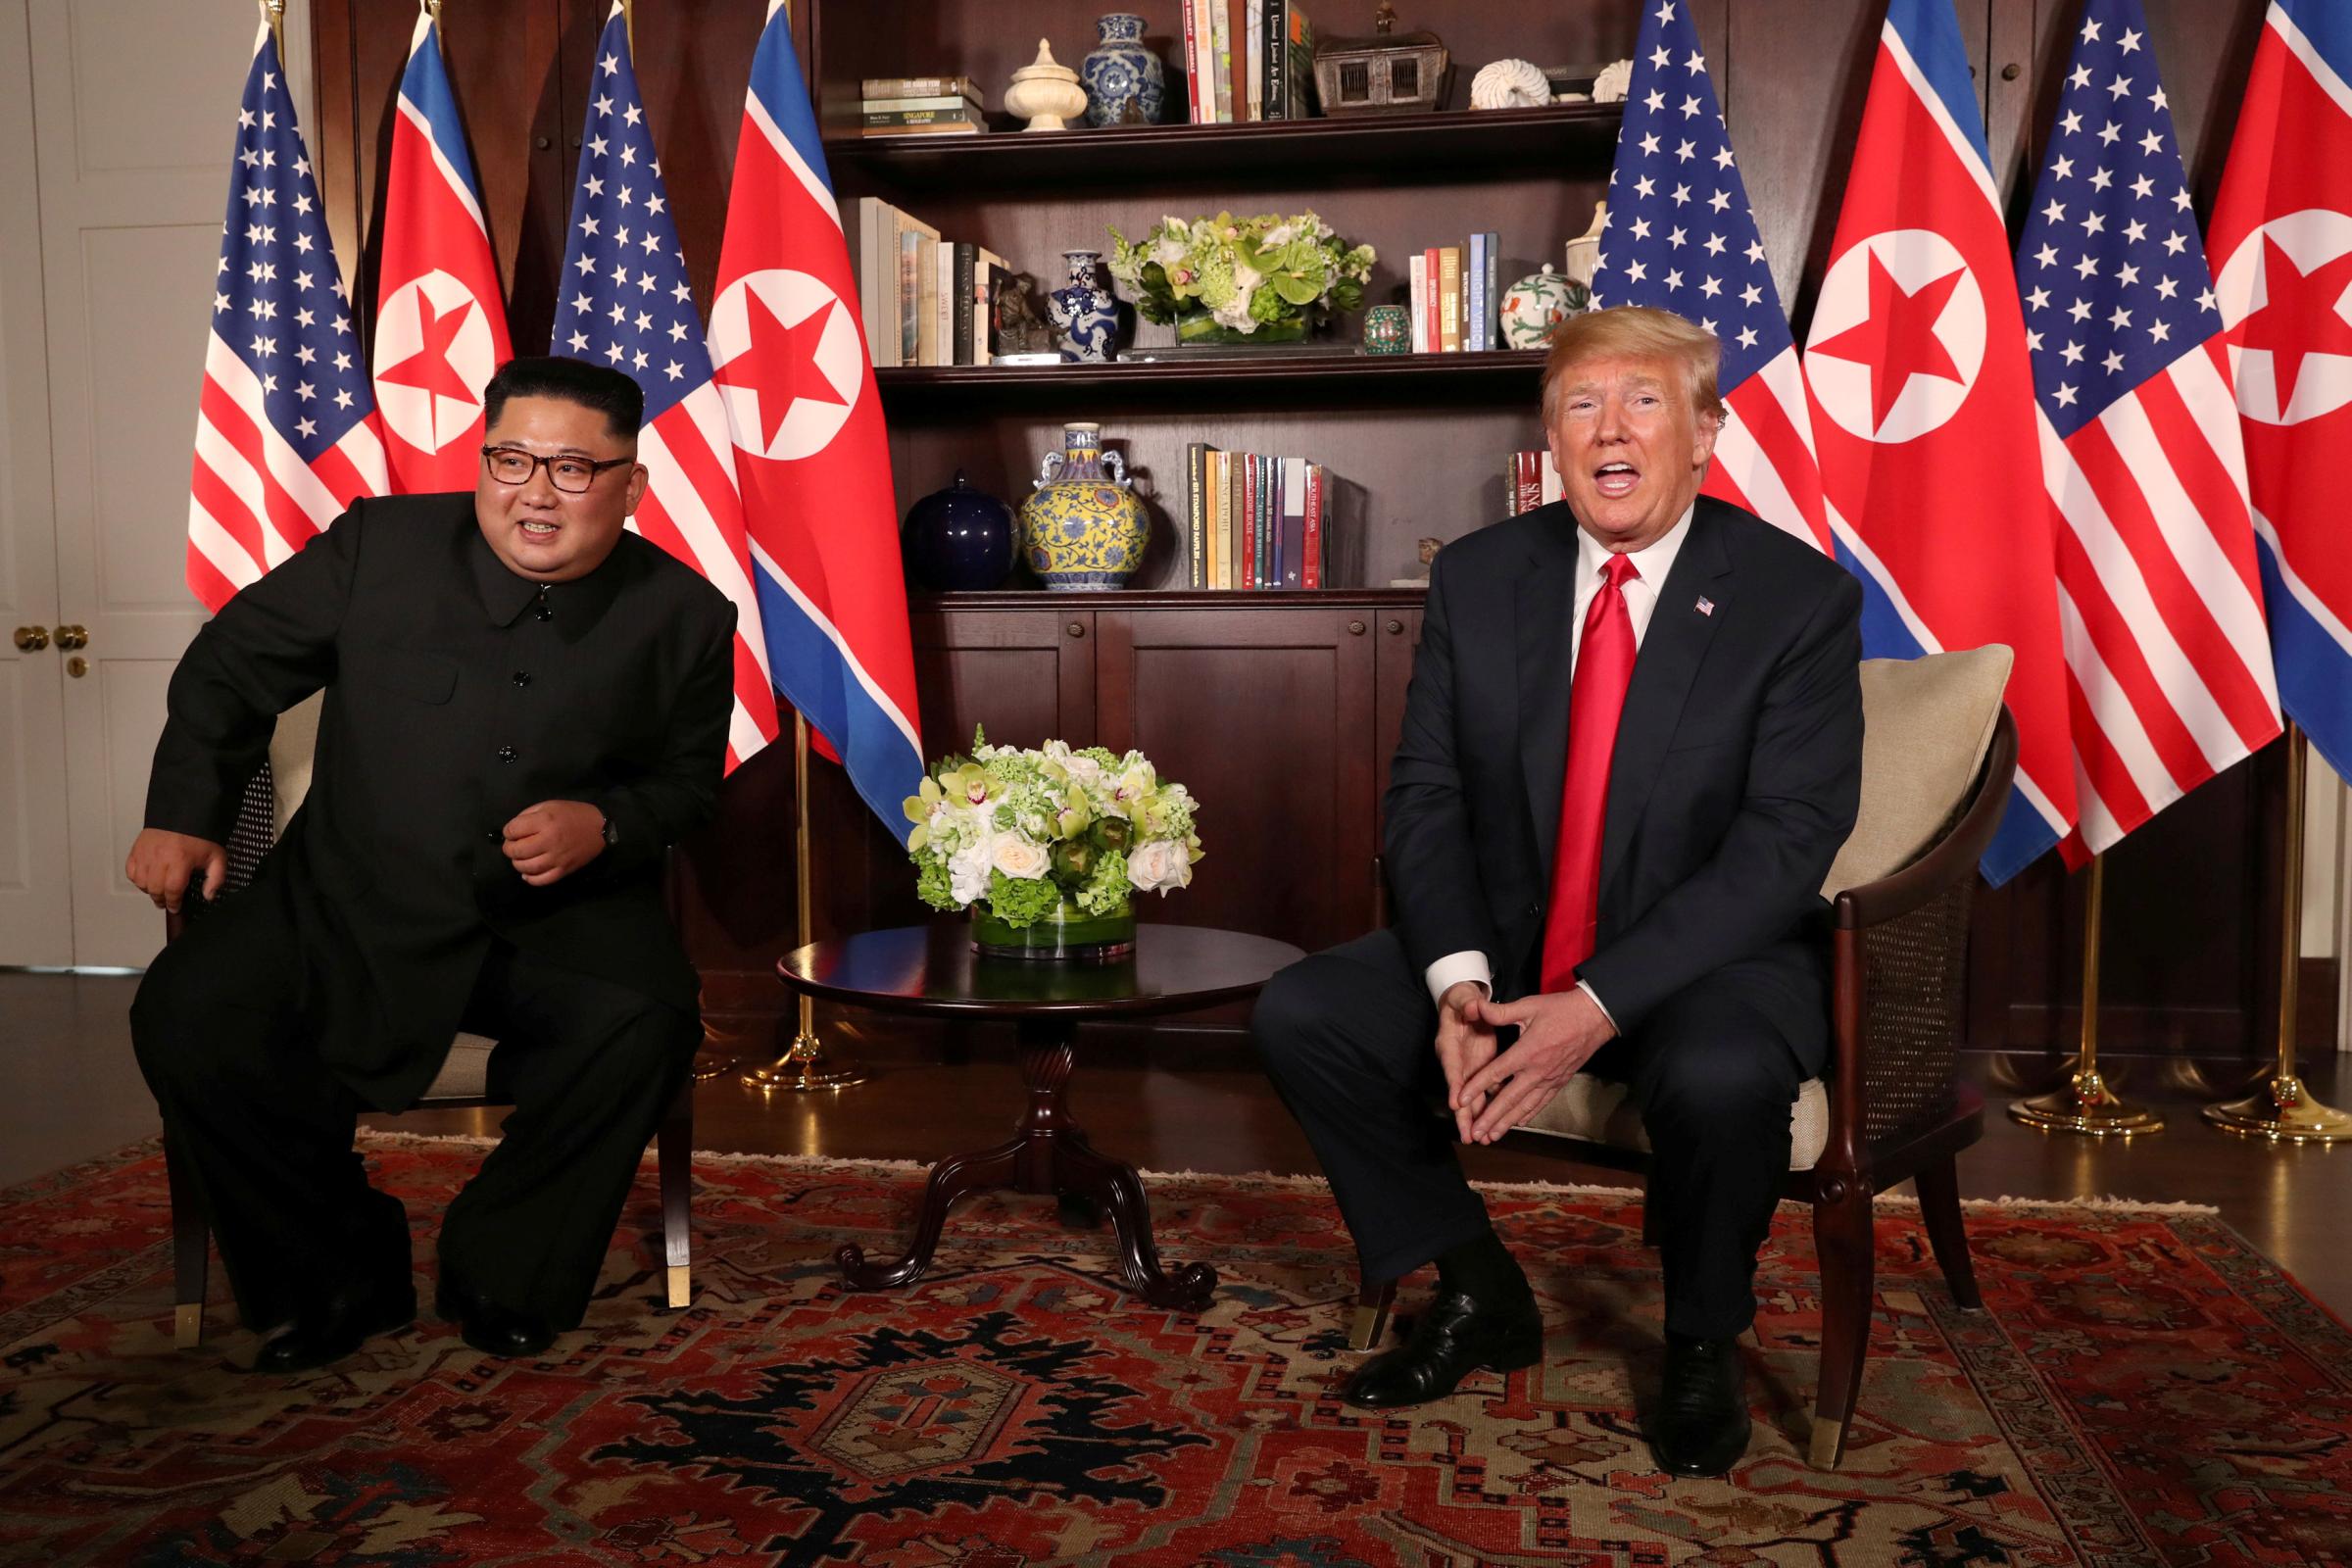 U.S. President Donald Trump sits next to North Korea's leader Kim Jong Un at the Capella Hotel in Singapore